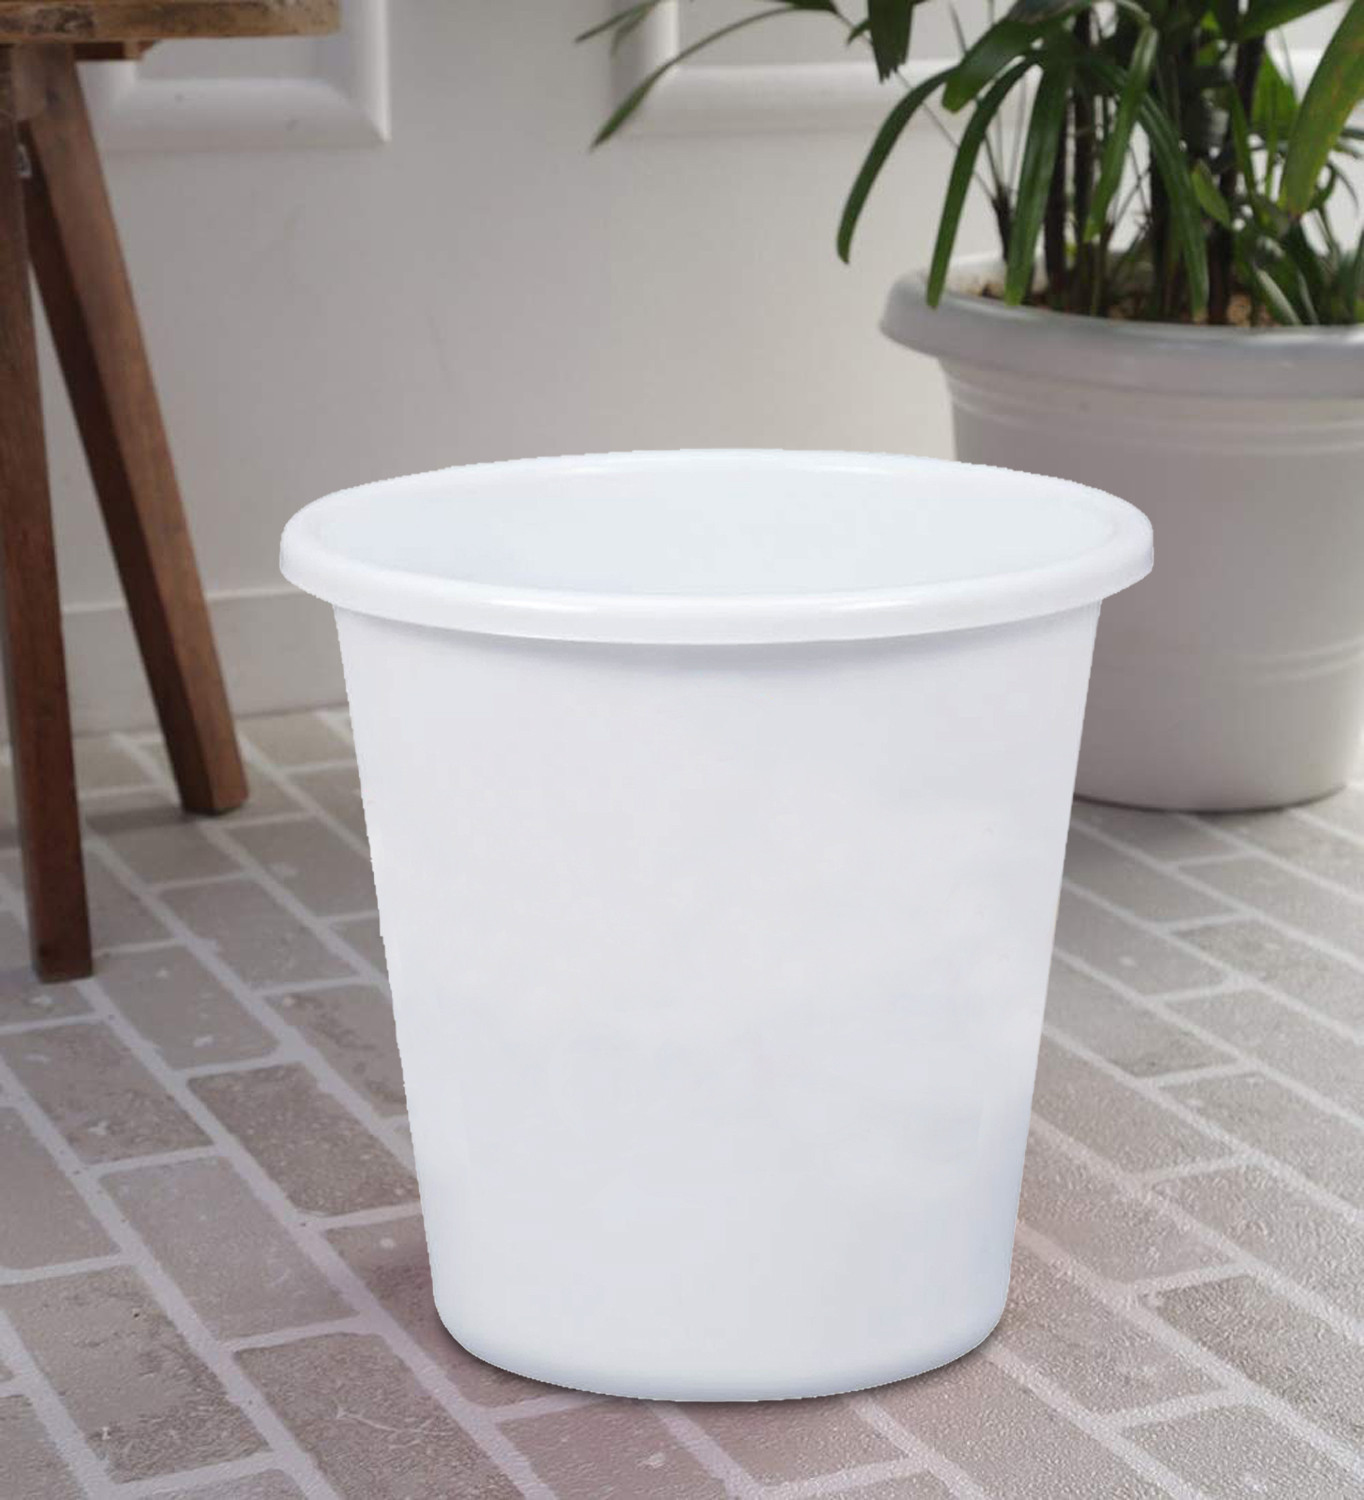 Kuber Industries Plastic Dustbin/ Garbage Bin/ Waste Bin, 5 Liters (White)-KUBMRT11742